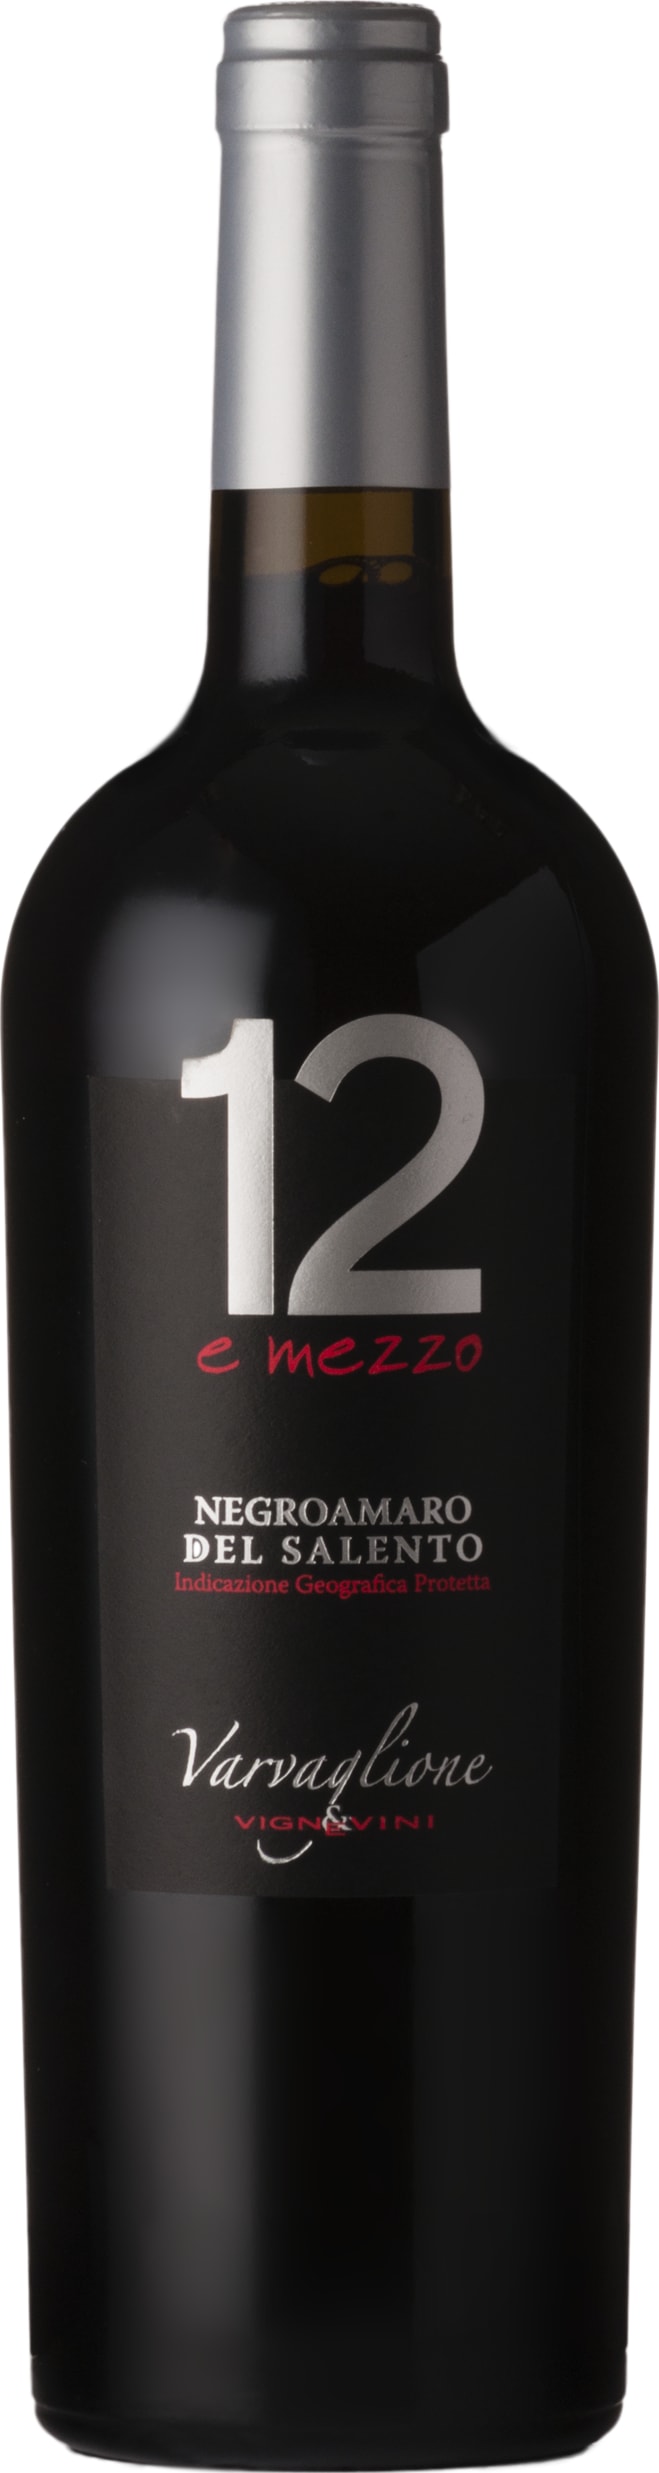 Varvaglione Negroamaro del Salento 2021 75cl - Buy Varvaglione Wines from GREAT WINES DIRECT wine shop